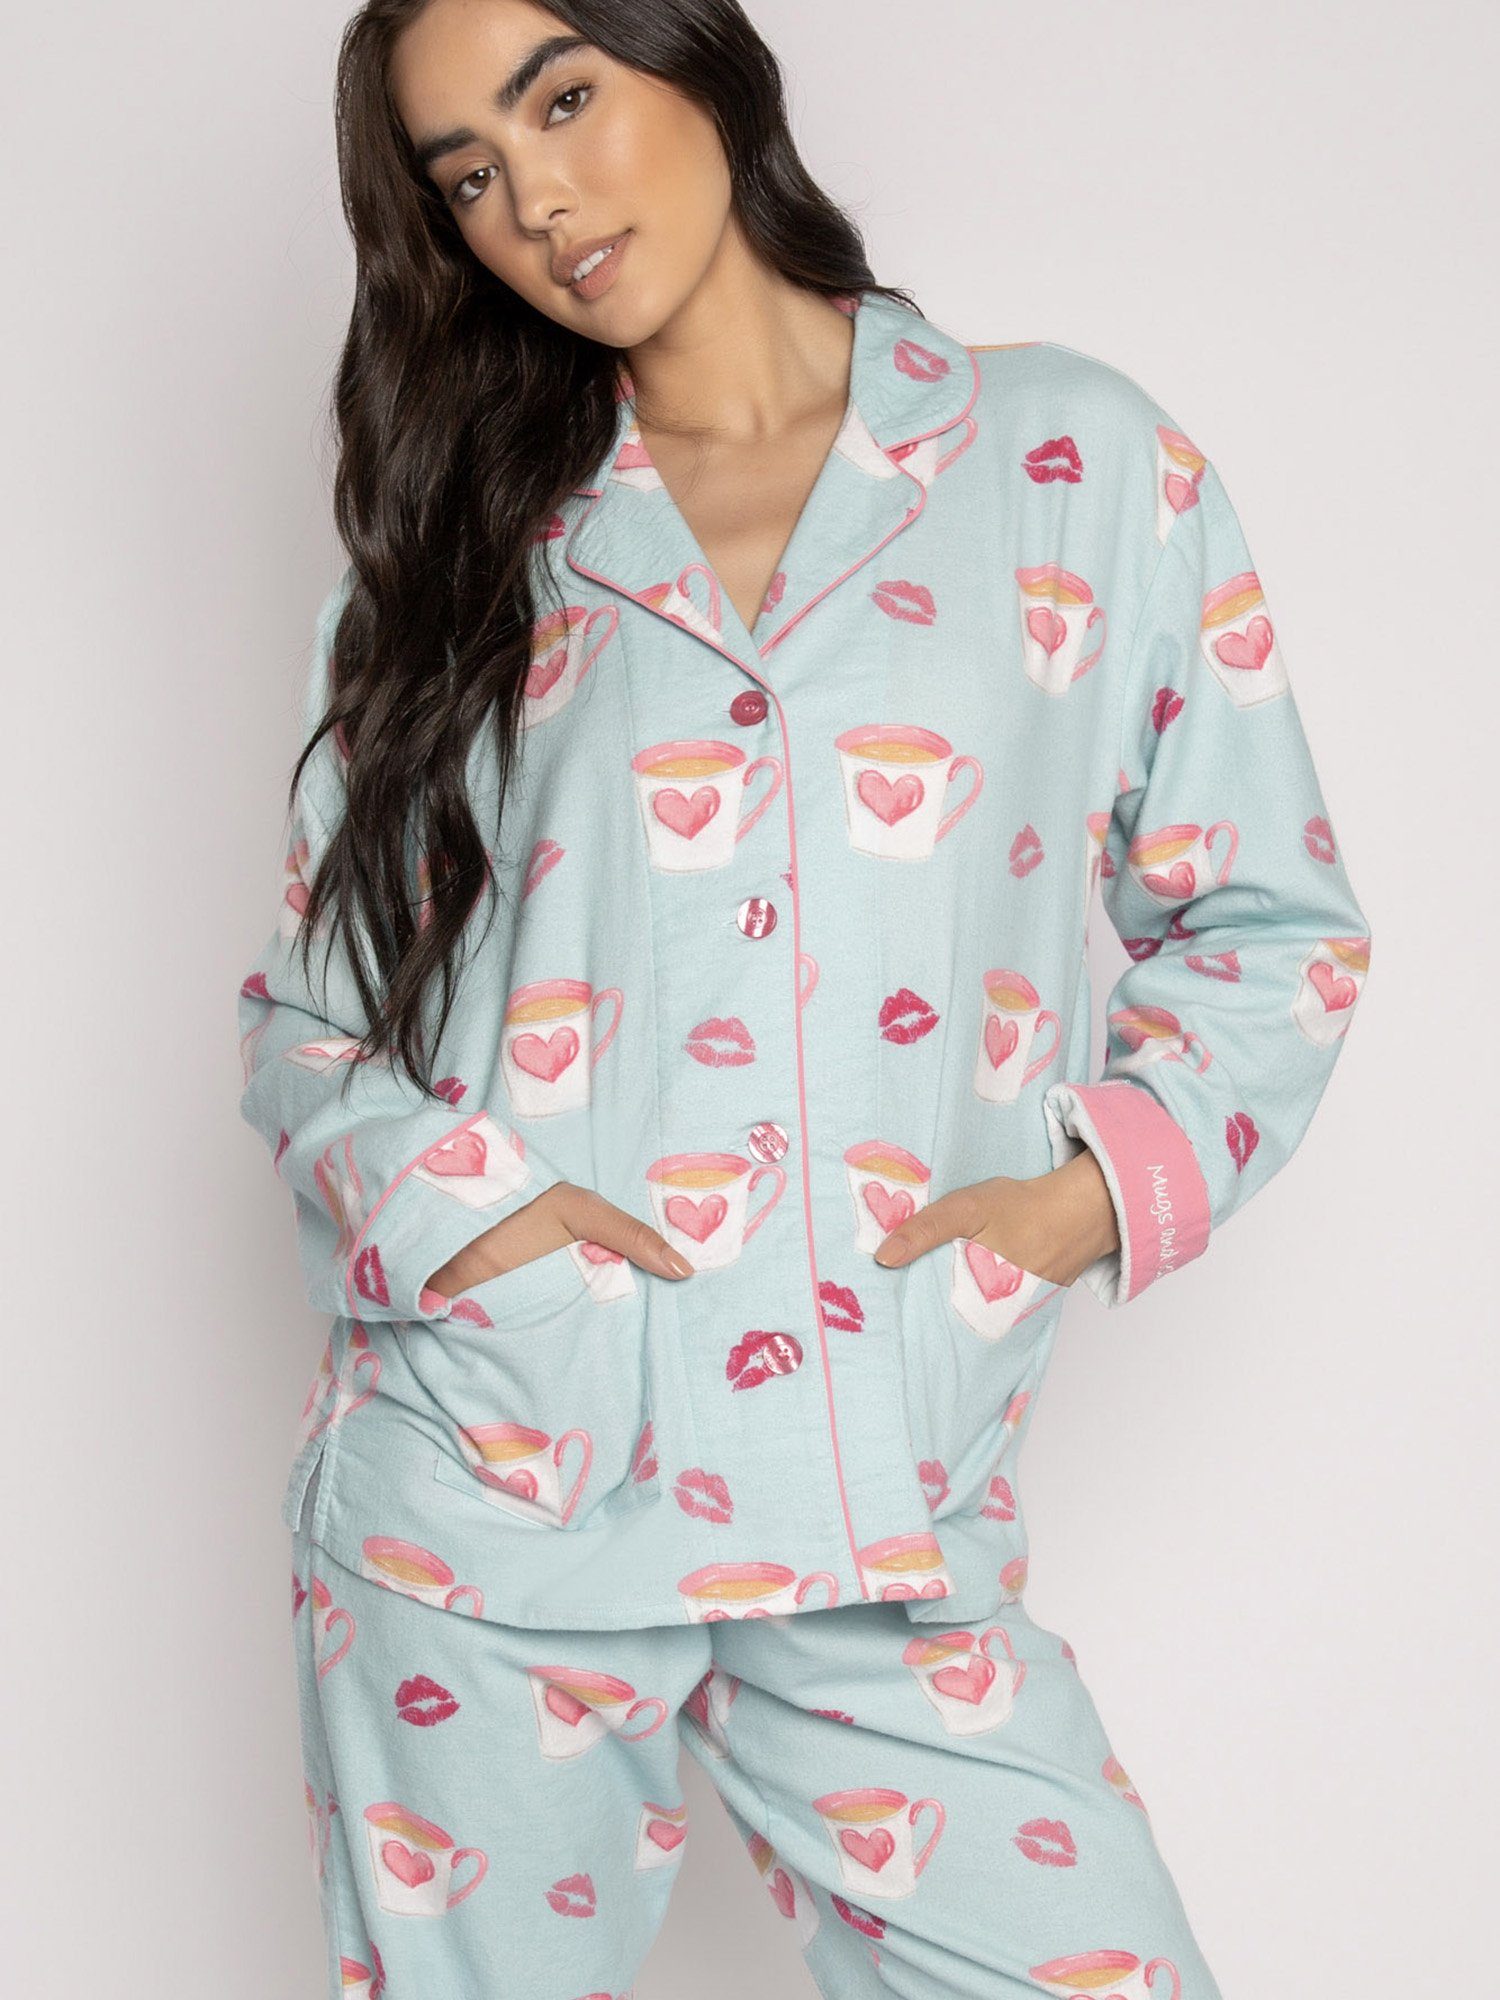 PJ Salvage pyjama Flanells schlafmode Pyjama aqua schlafanzug